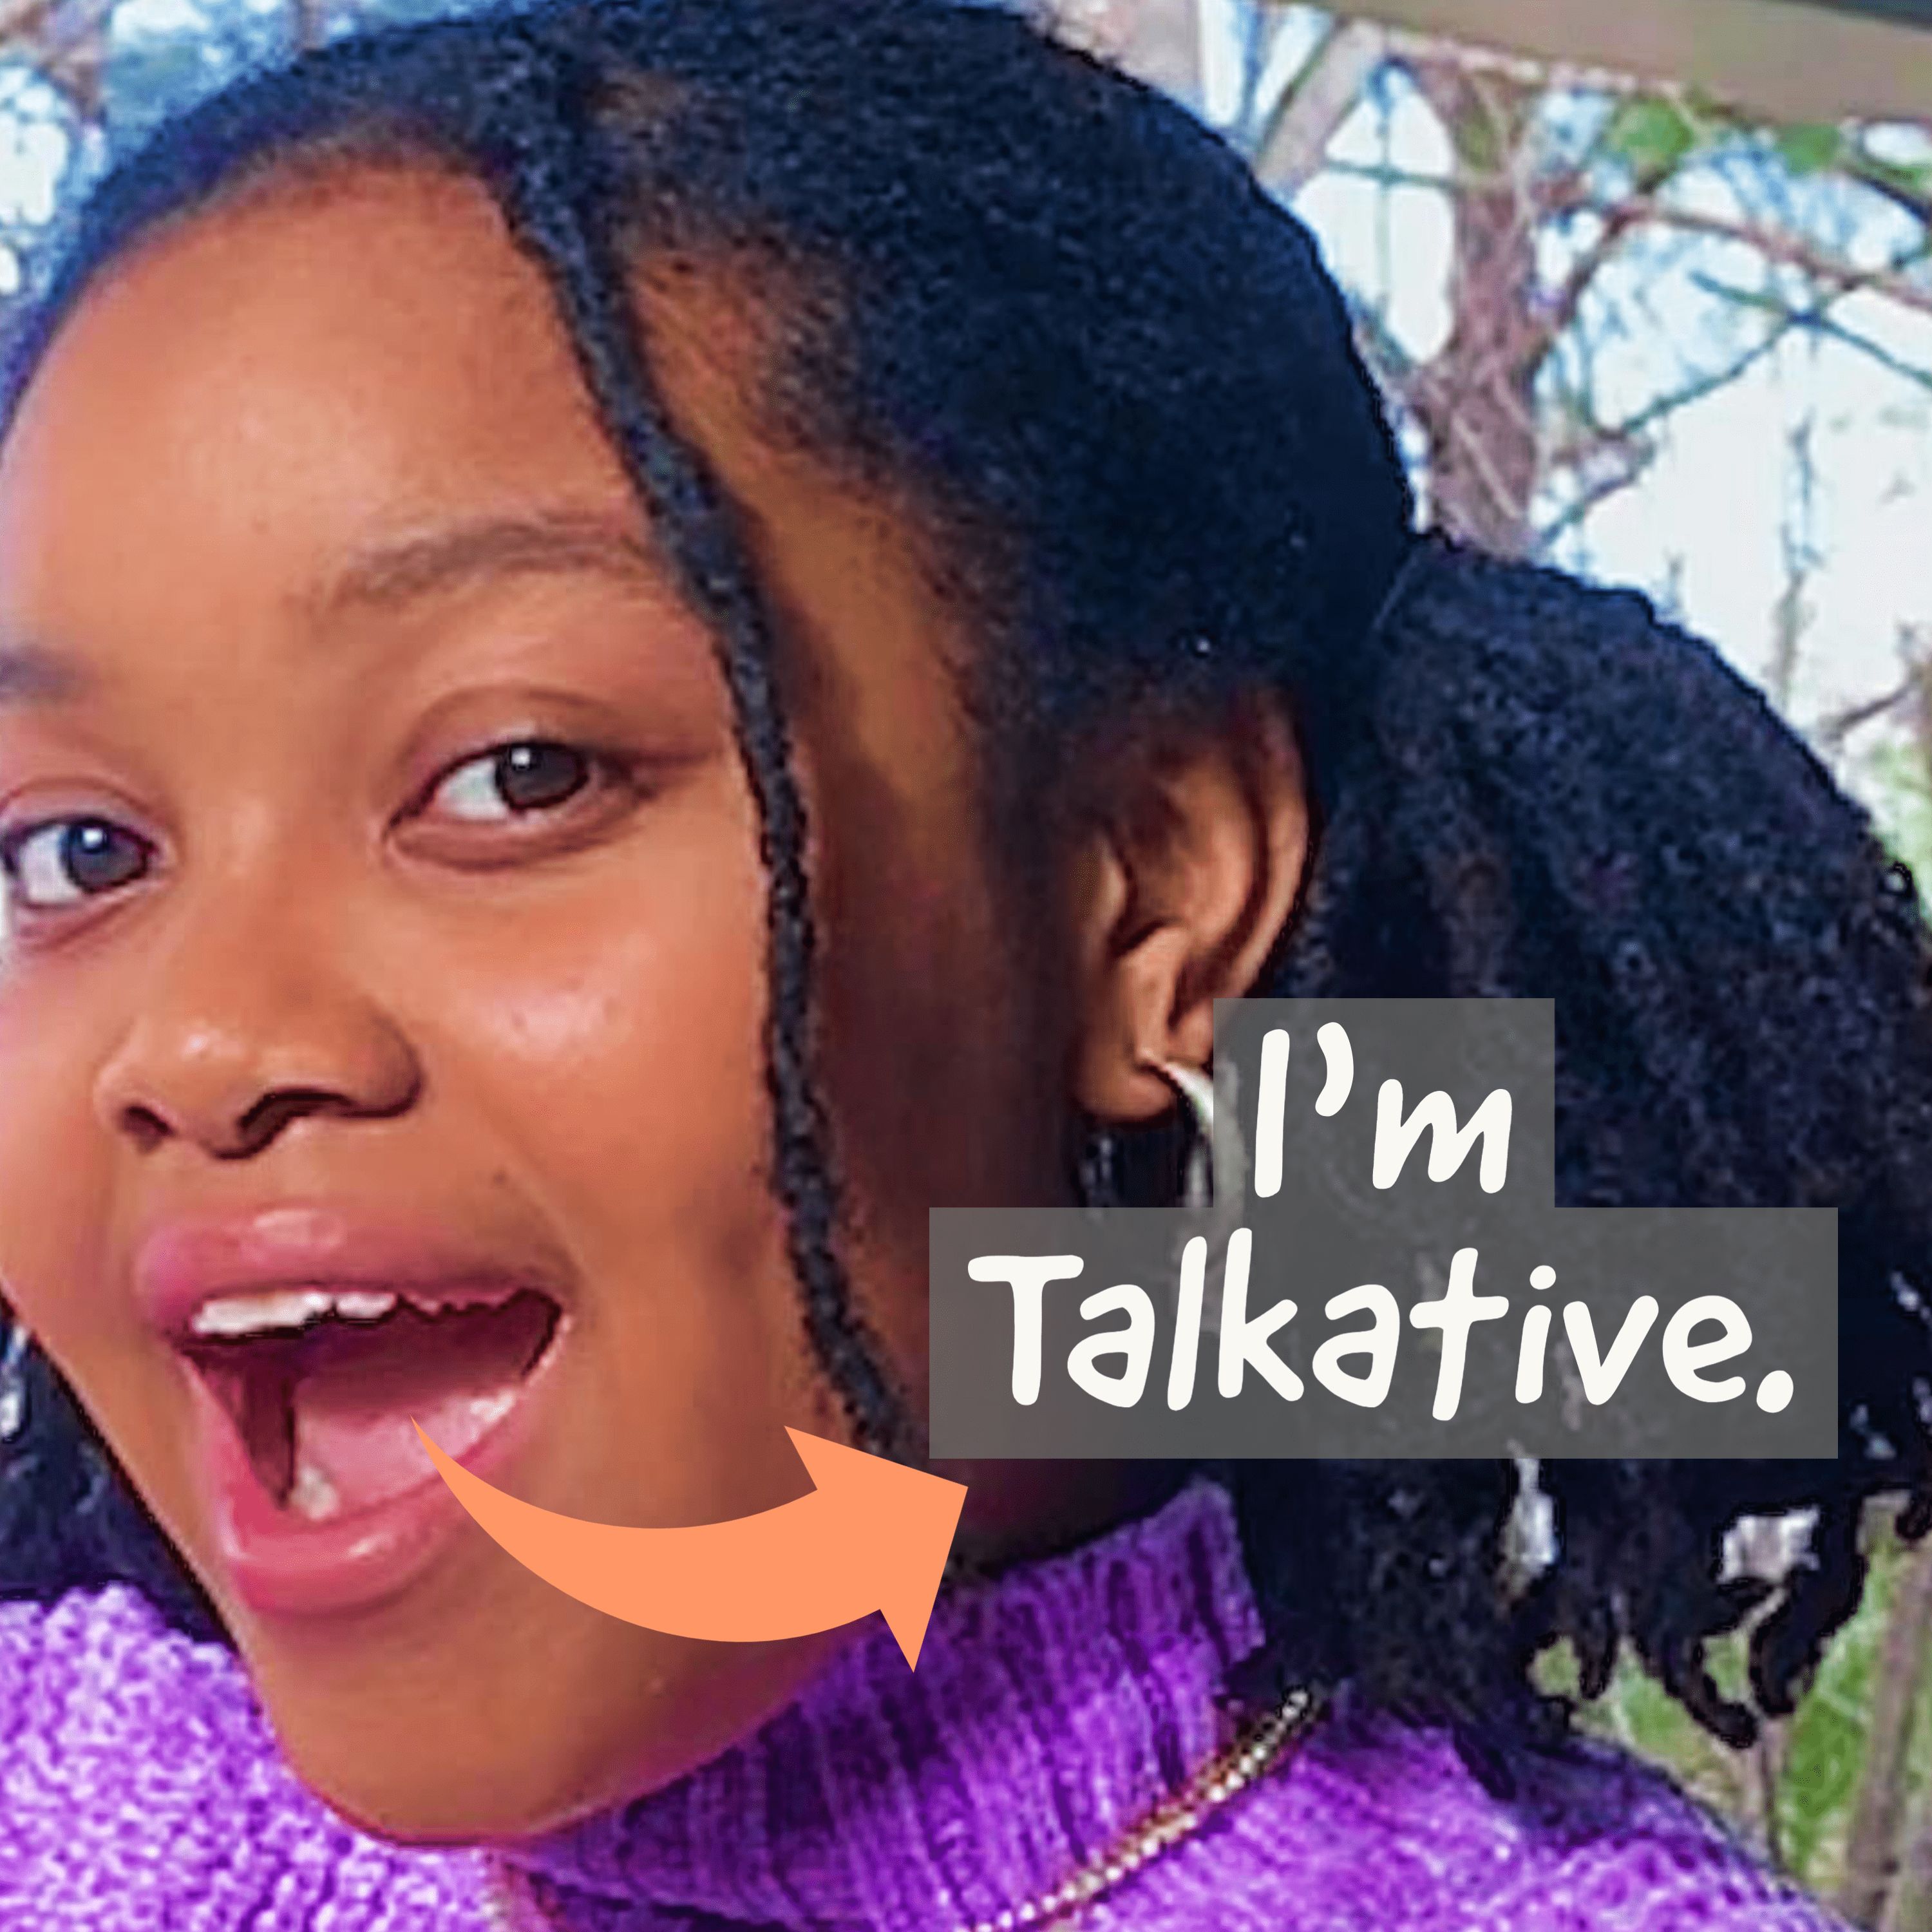 I'm Talkative.